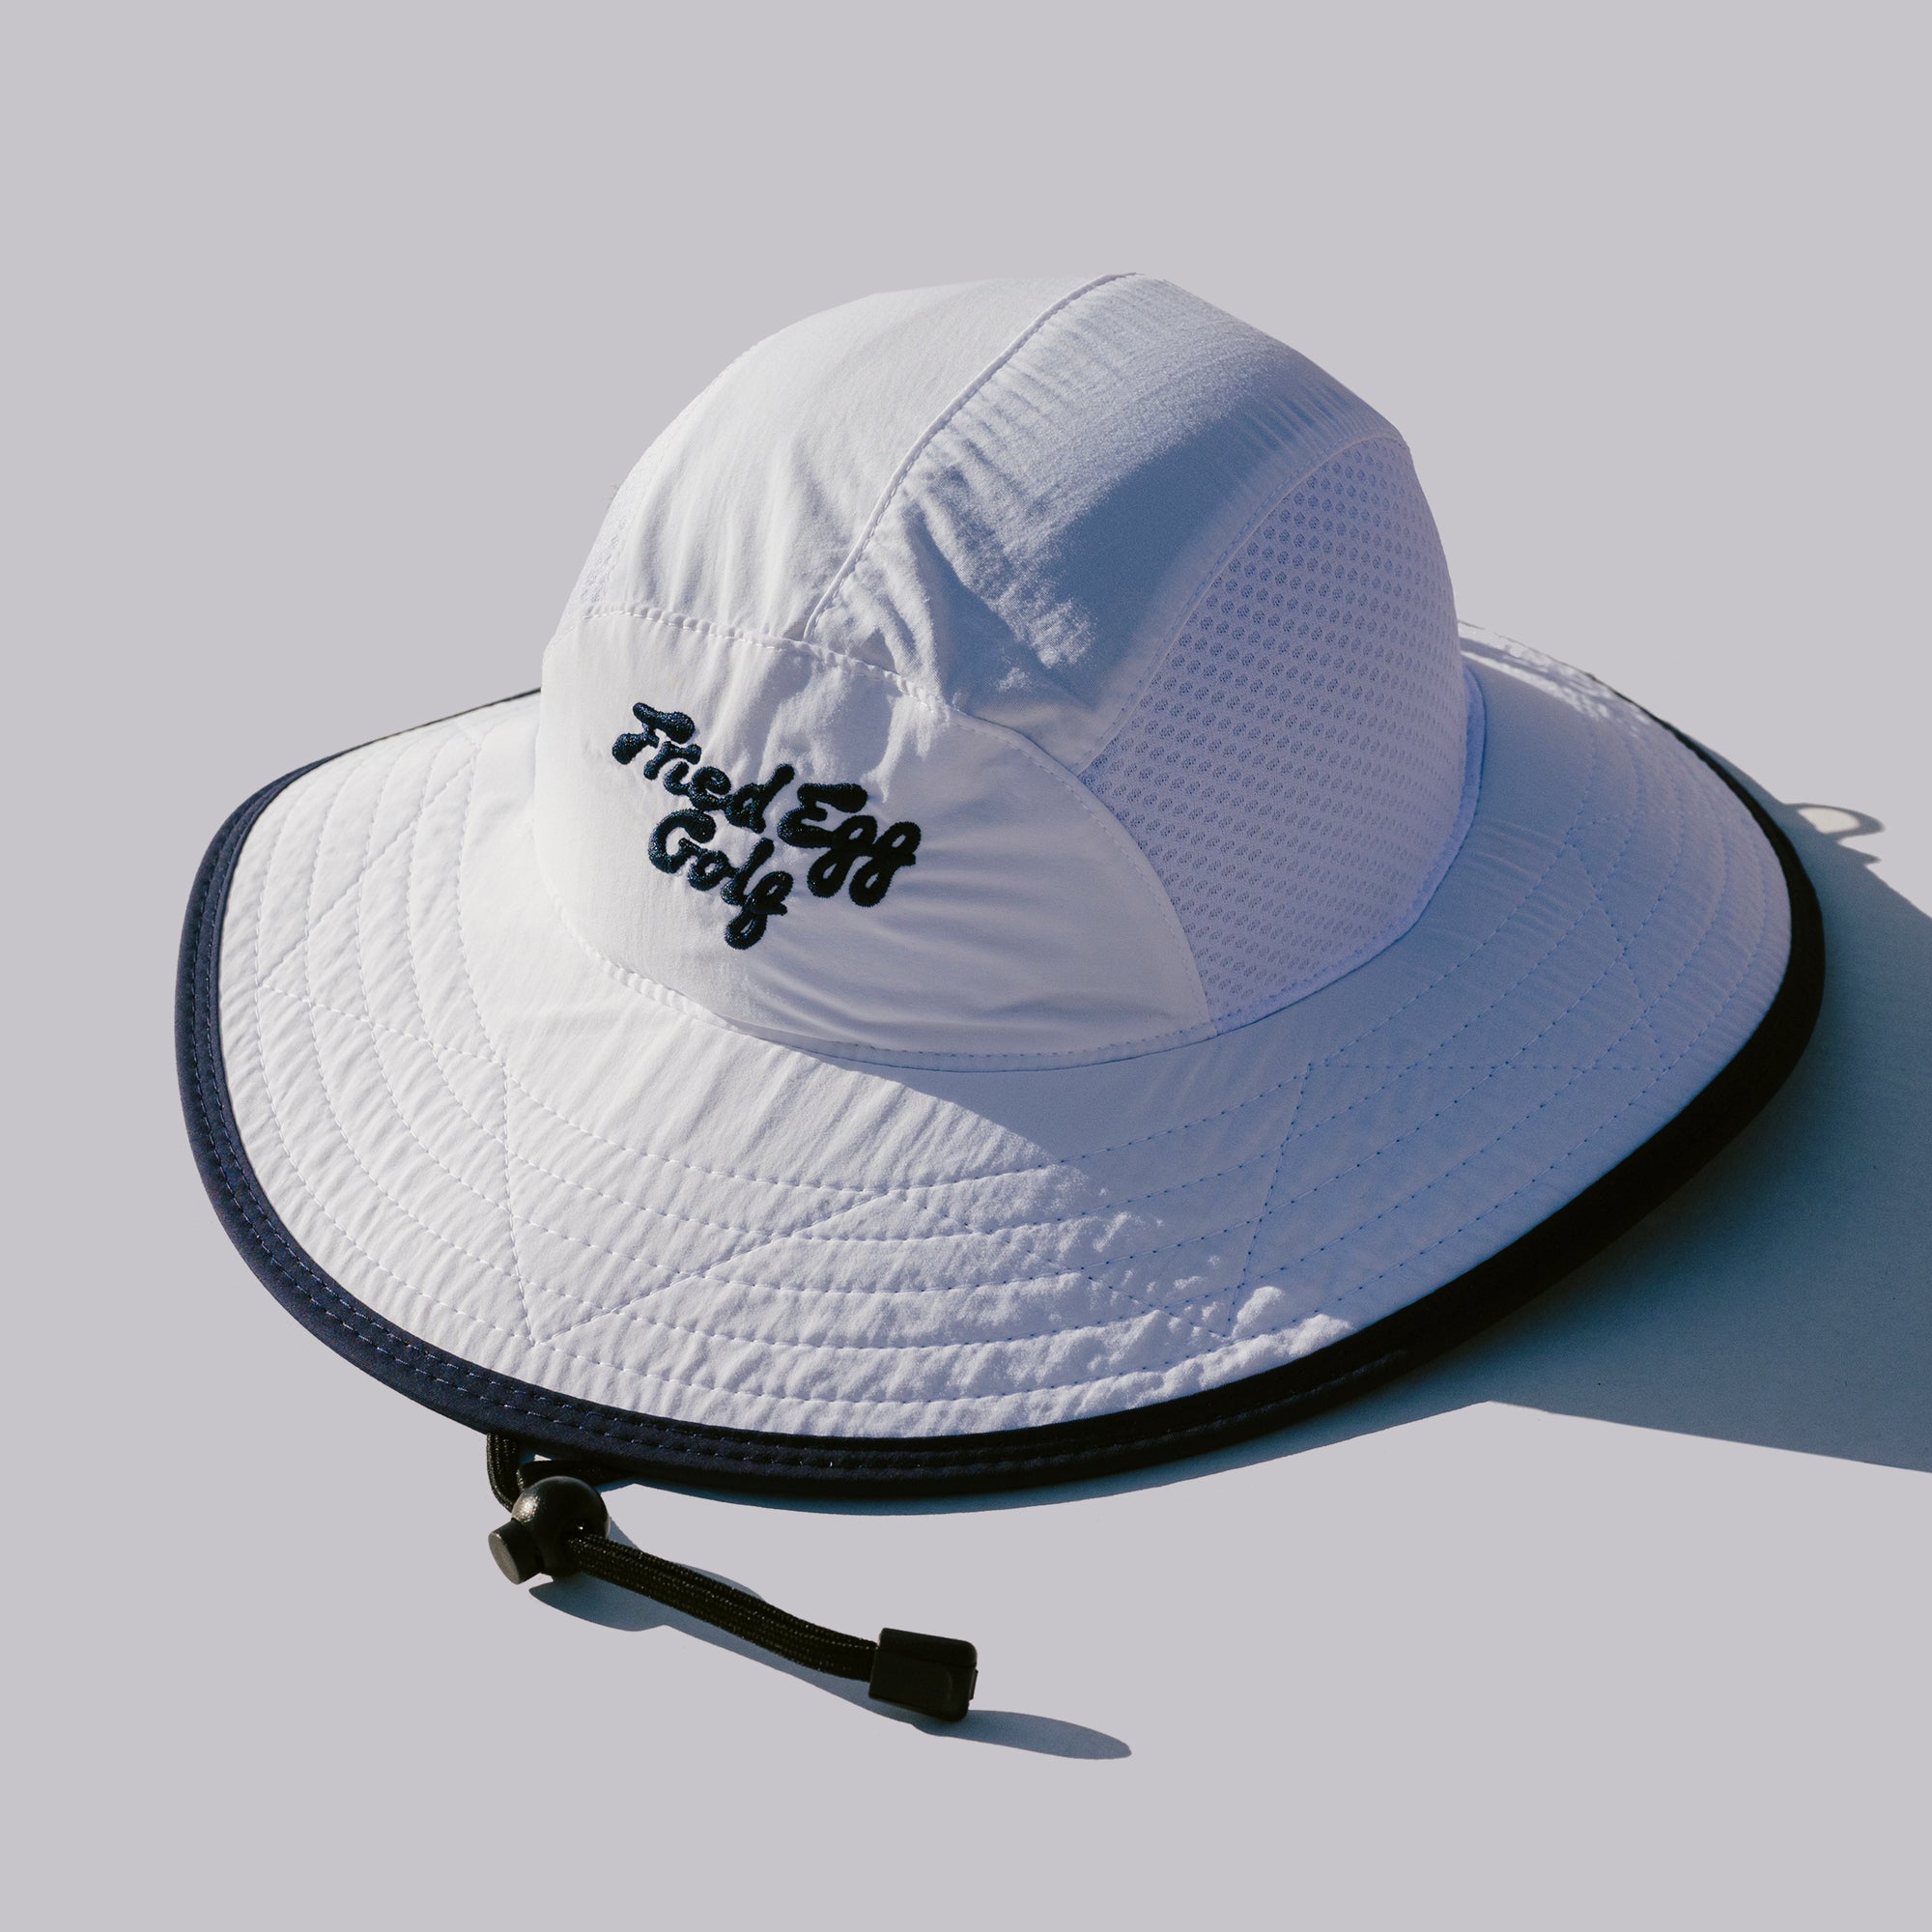 Fried Egg Golf Sun Protection Hat - White/Navy